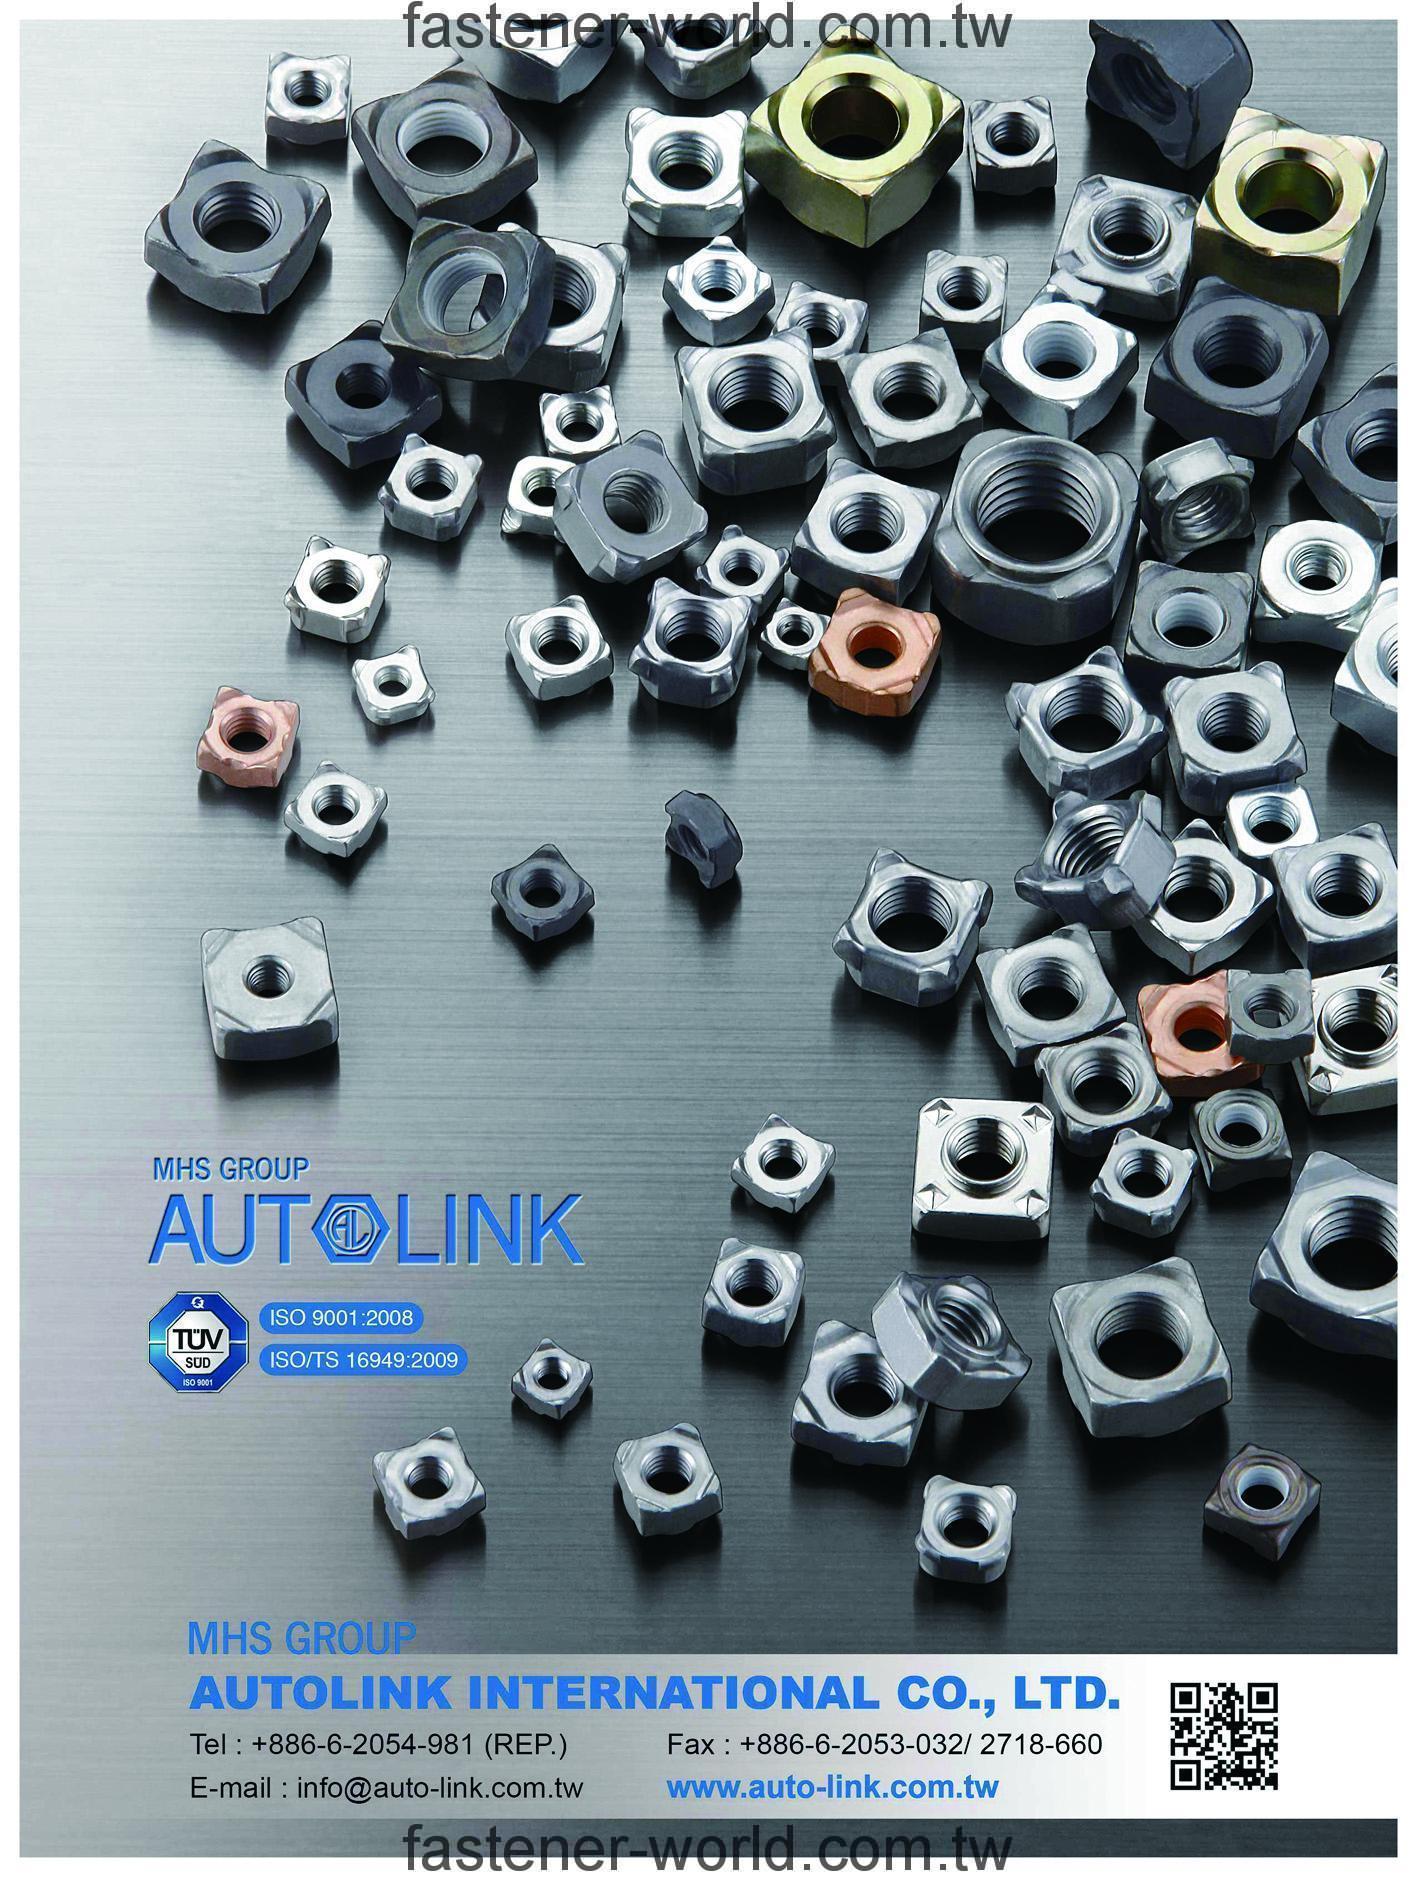 AUTOLINK INTERNATIONAL CO., LTD. Online Catalogues